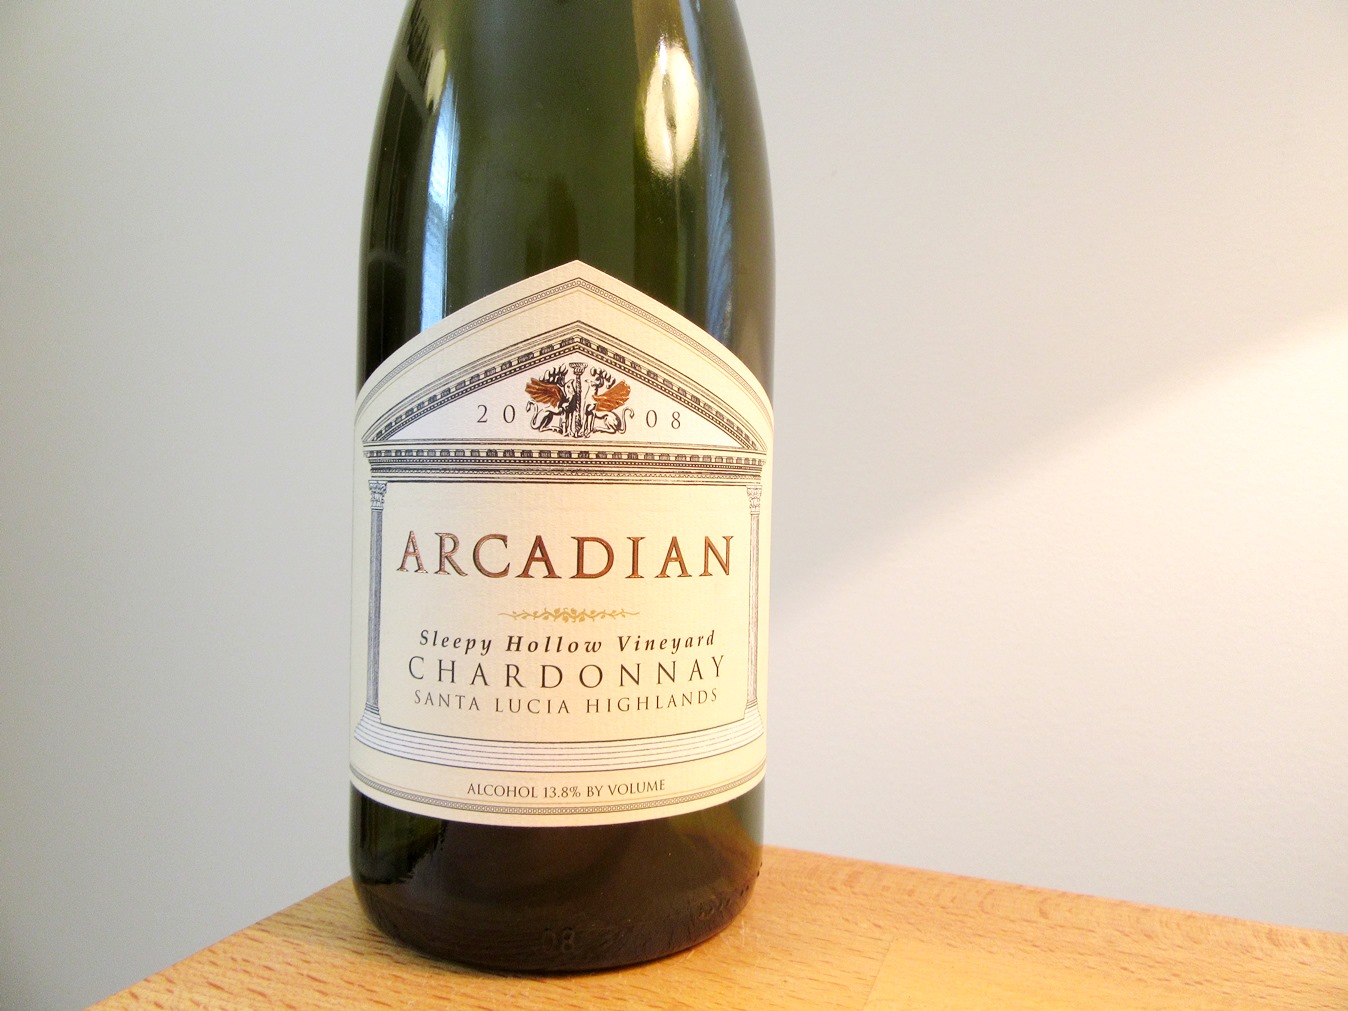 Arcadian, Sleepy Hollow Vineyard Chardonnay 2008, Santa Lucia Highlands, California, Wine Casual